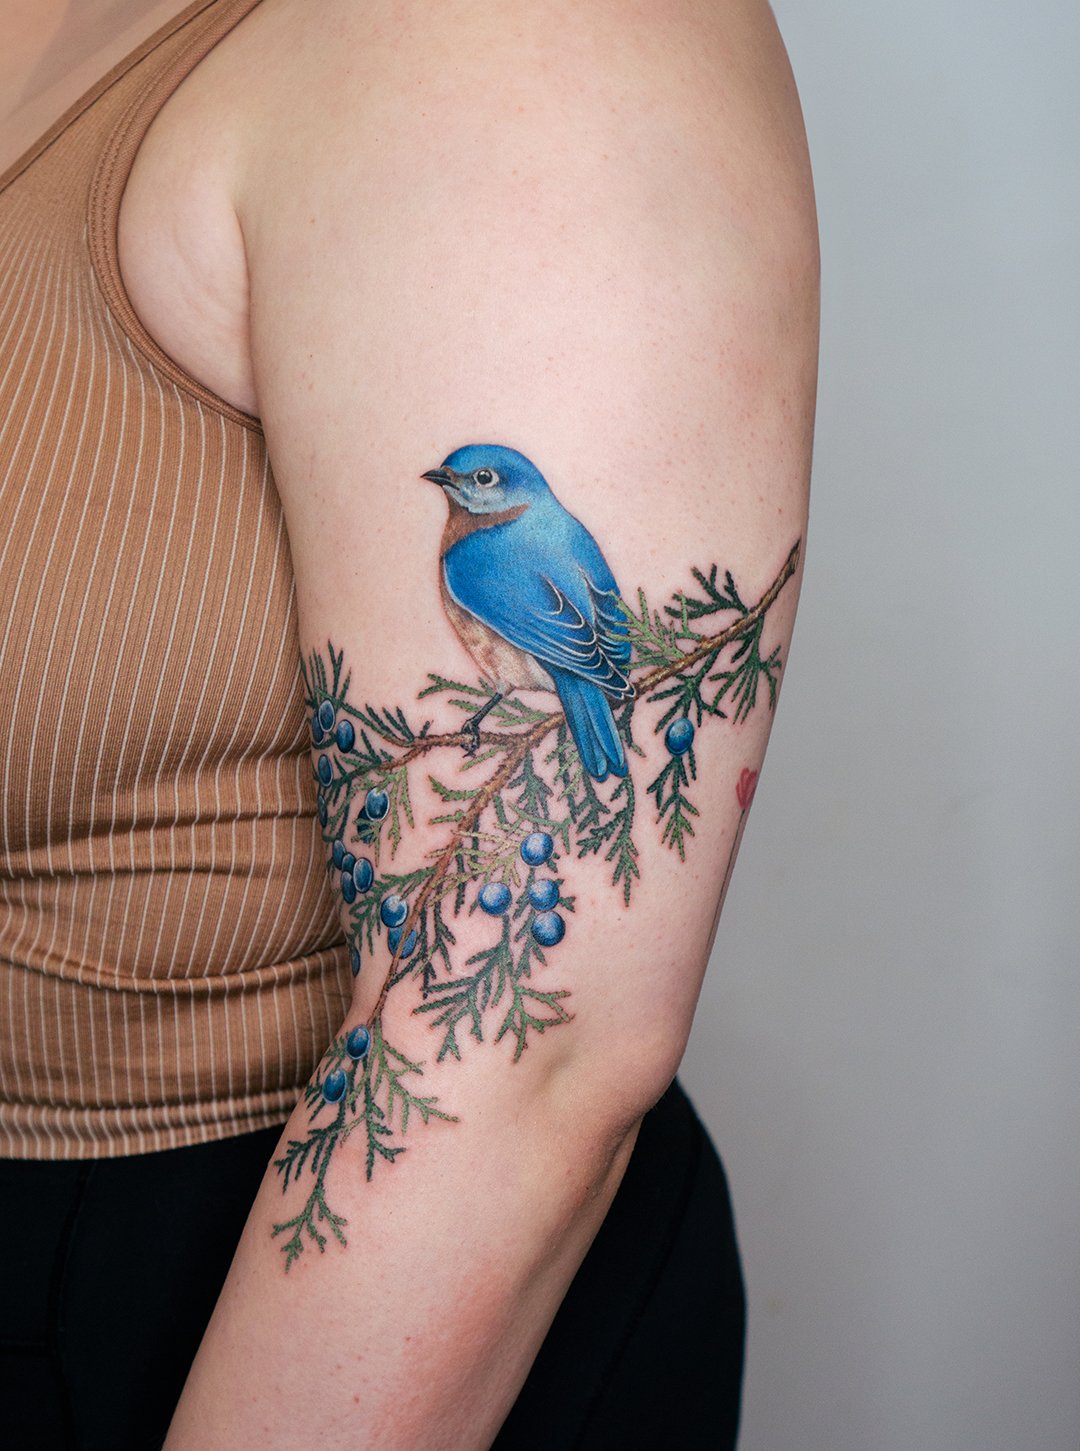 Inknetic Studio - 🐦🌸🍃Beautiful blue bird tattoo! Done by Dan @mrsydlo  #inknetic #inkneticstudio #bluebird #birdtattoo #tattoo #ndtattoo #inked  #floraltattoo #lilac #tattooideas #tattoos #beautiful #colortattoo |  Facebook